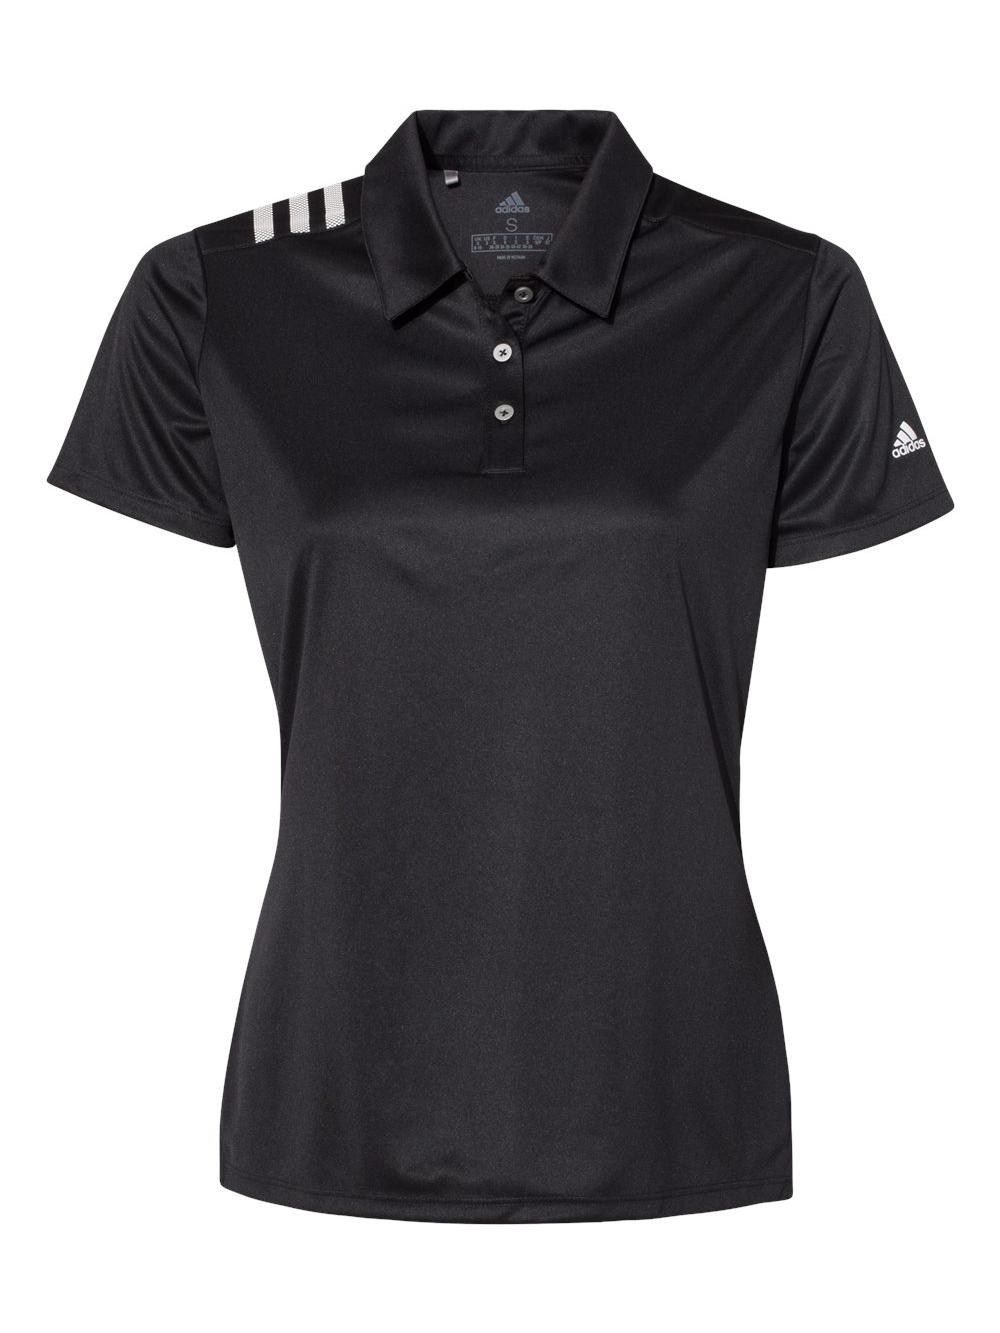 Adidas - Women's 3-Stripes Shoulder Polo - A325 - Black/ White - Size: 3XL - image 2 of 3